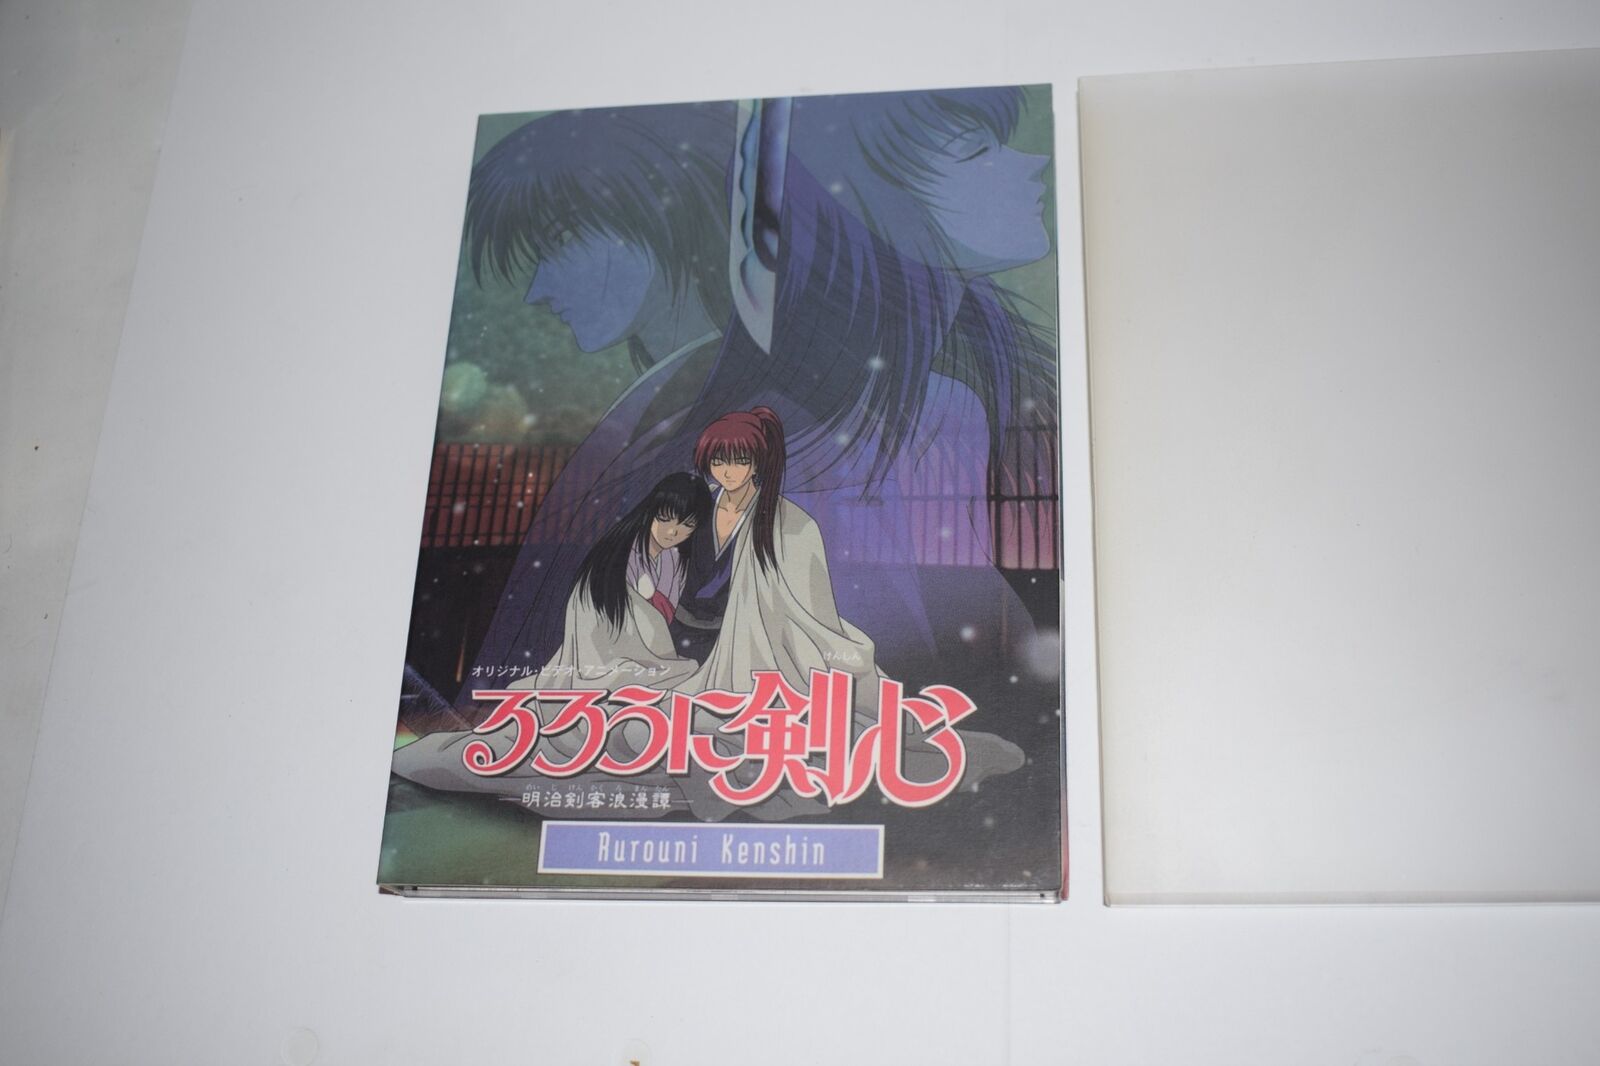 333 Rurouni Kenshin Ultimate Ova Collection 2-disc dvd set (CHI14)